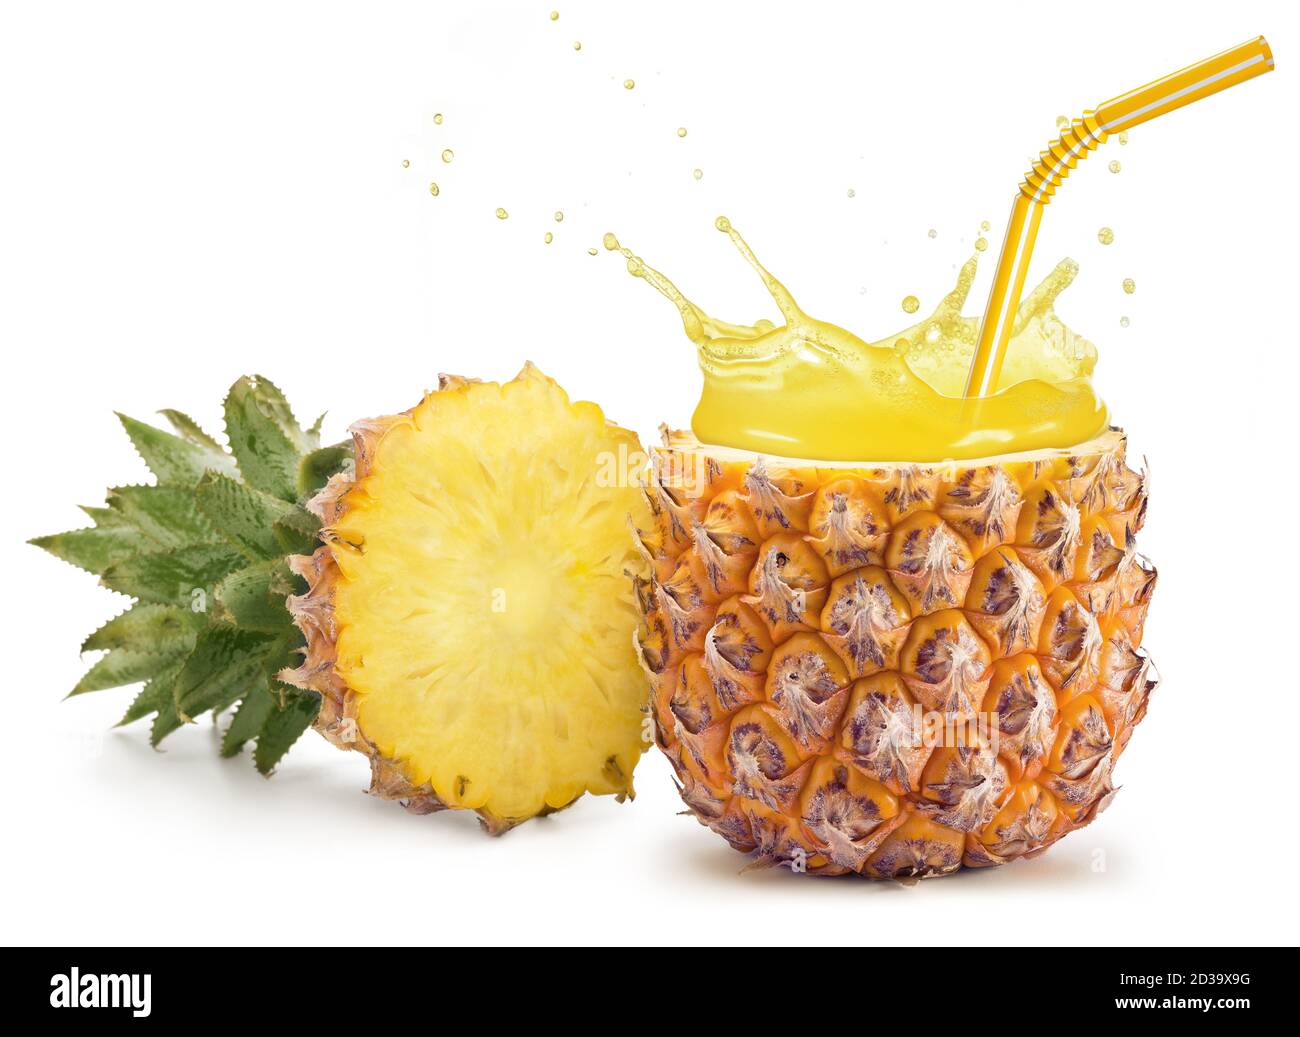 drinking straw in a pineapple splashing on white background Stock Photo